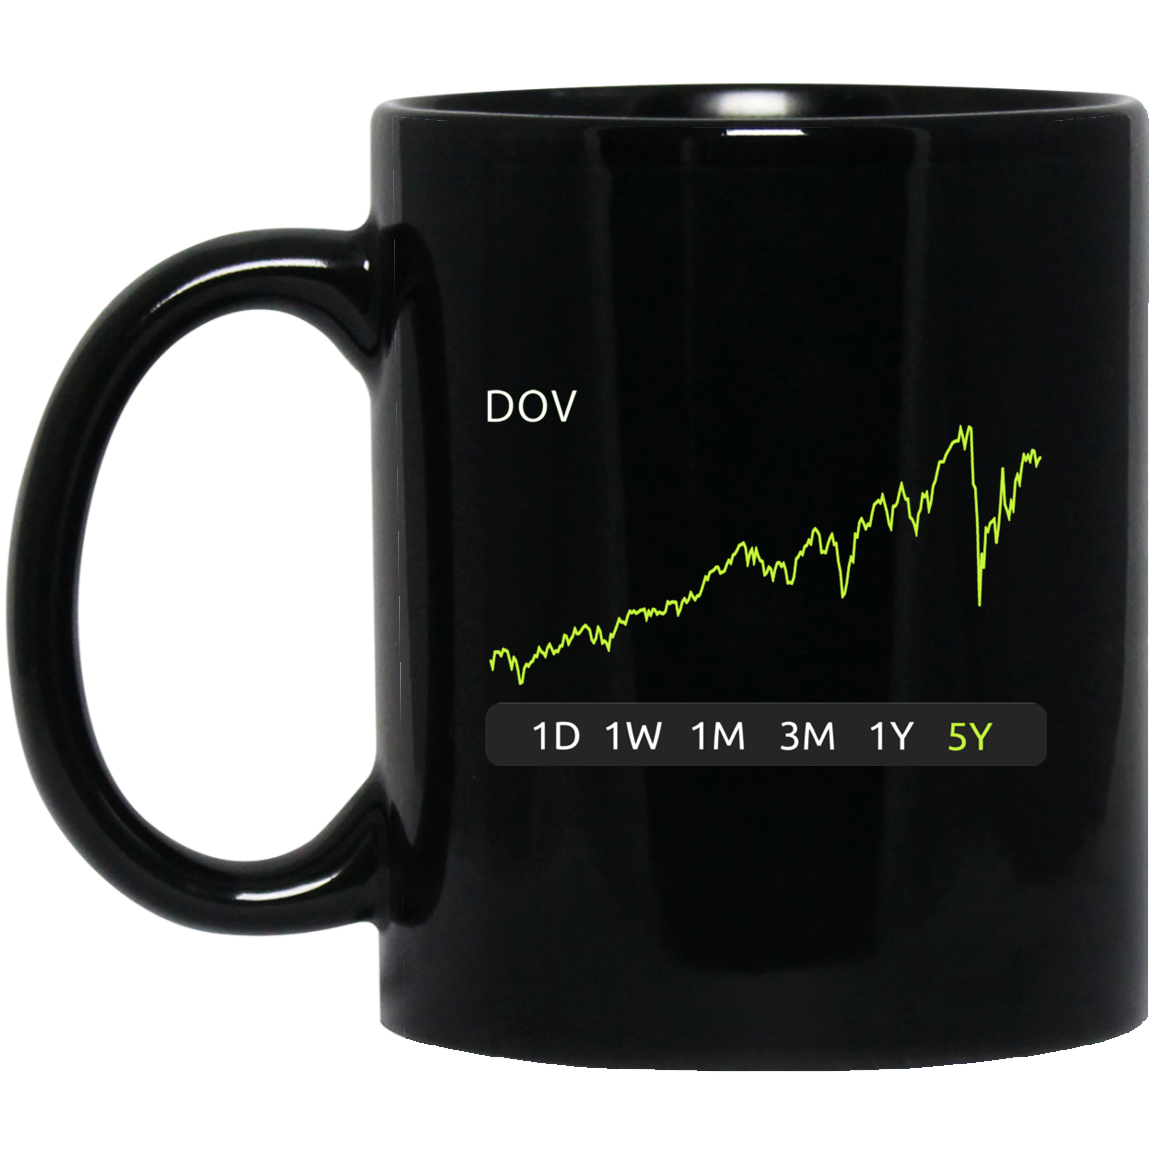 DOV Stock 5y Mug